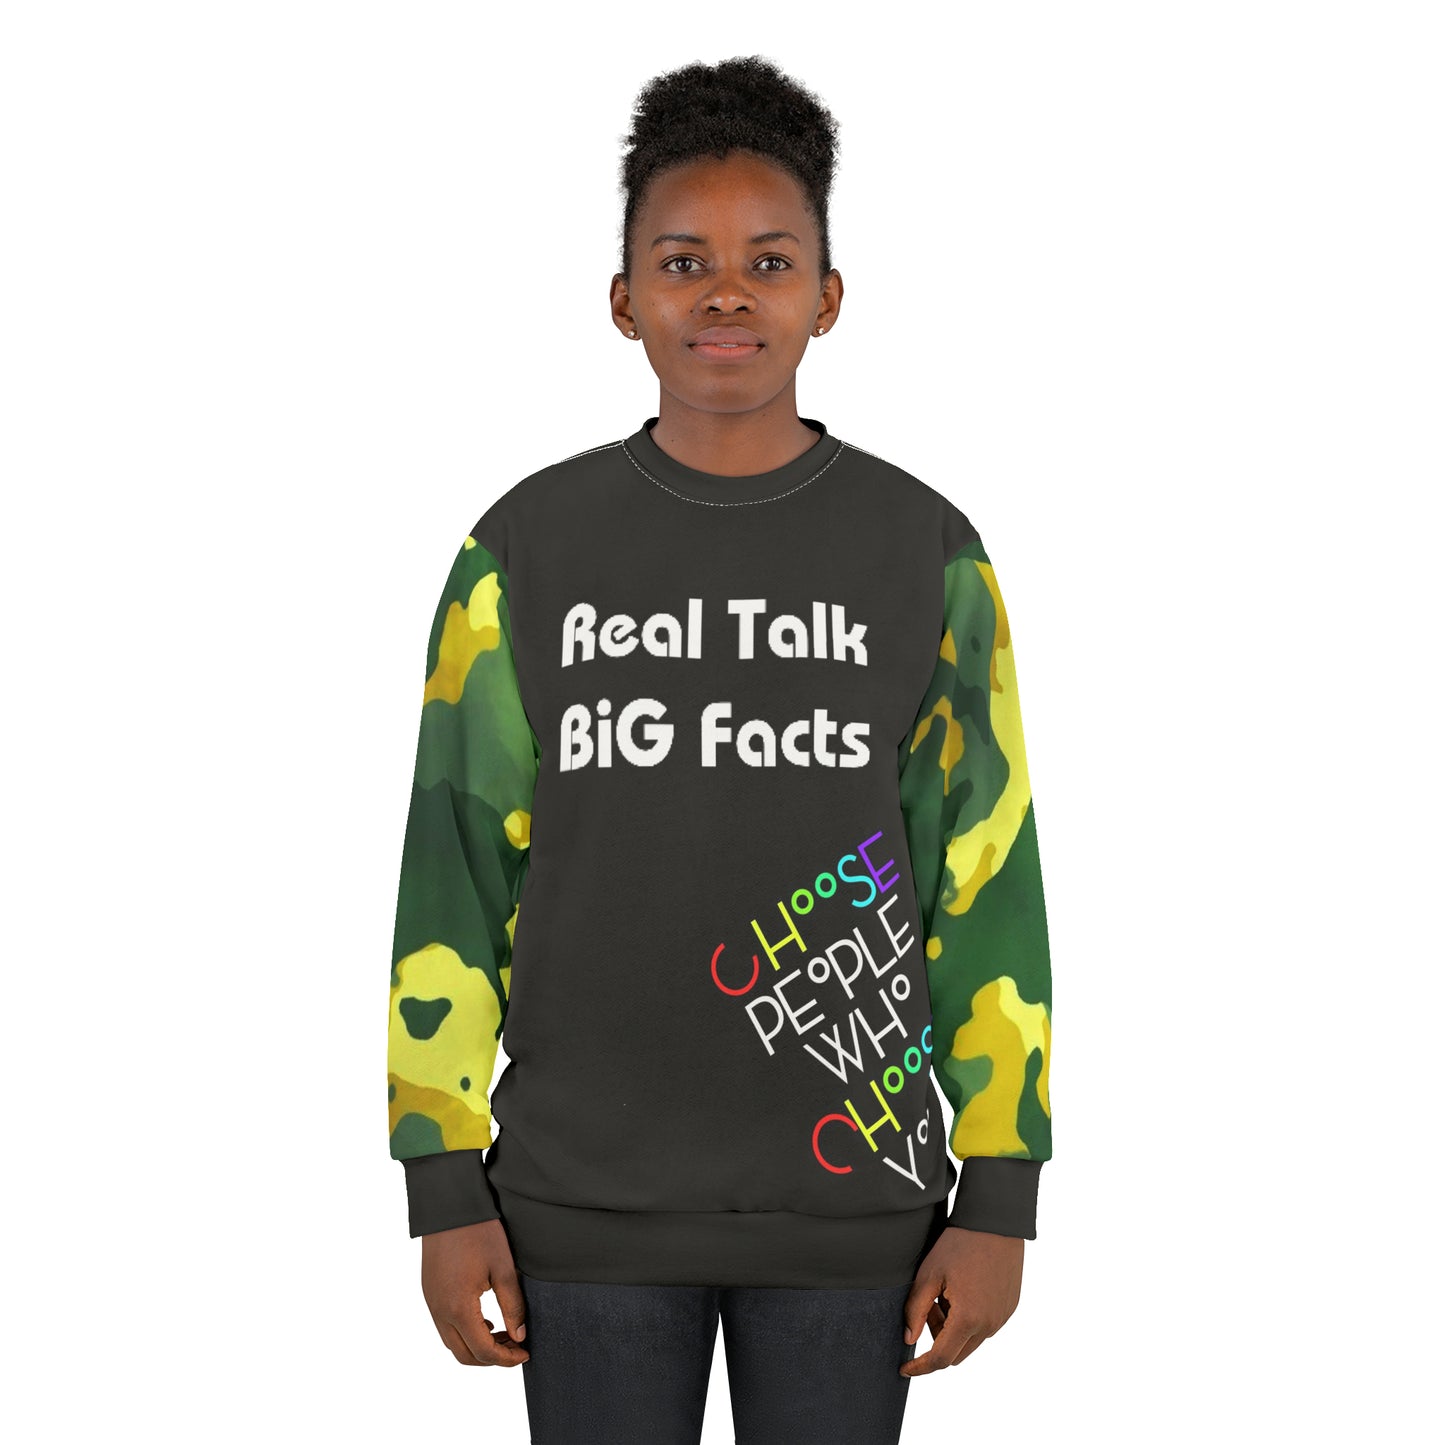 Real Talk BiG Facts “Choose People Who Choose You “ Unisex Sweatshirt